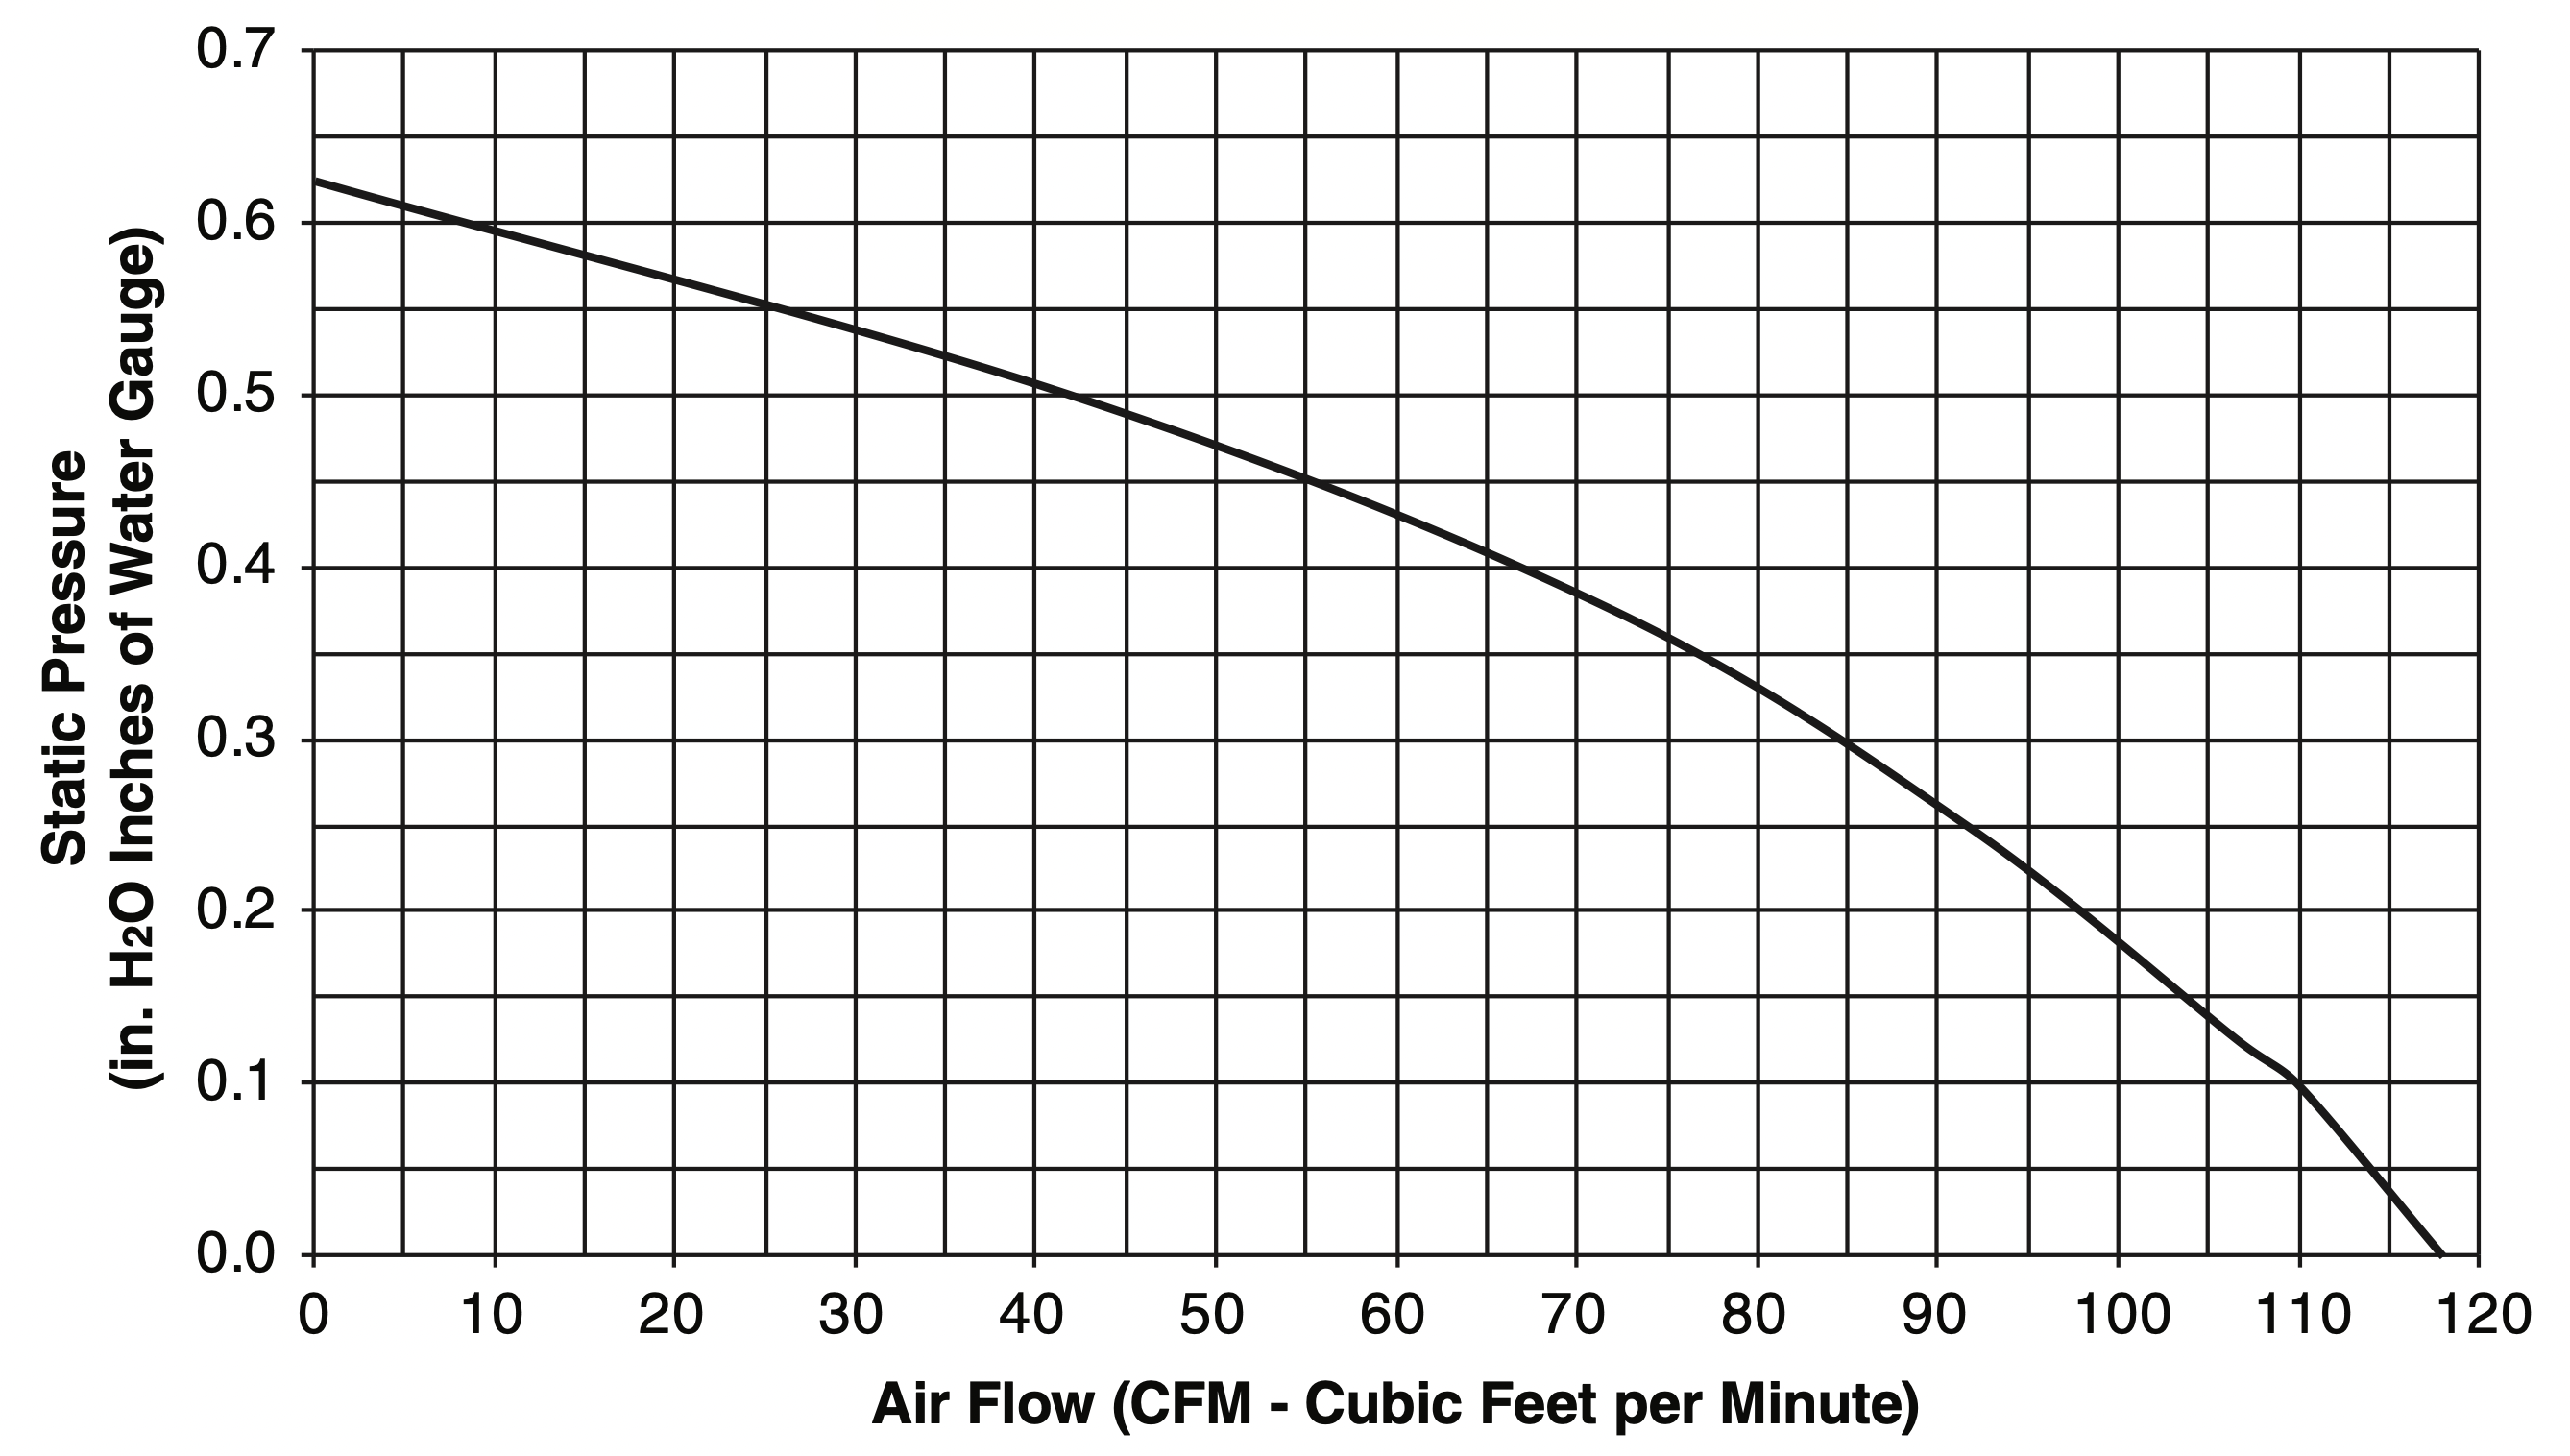 A110L airflow performance